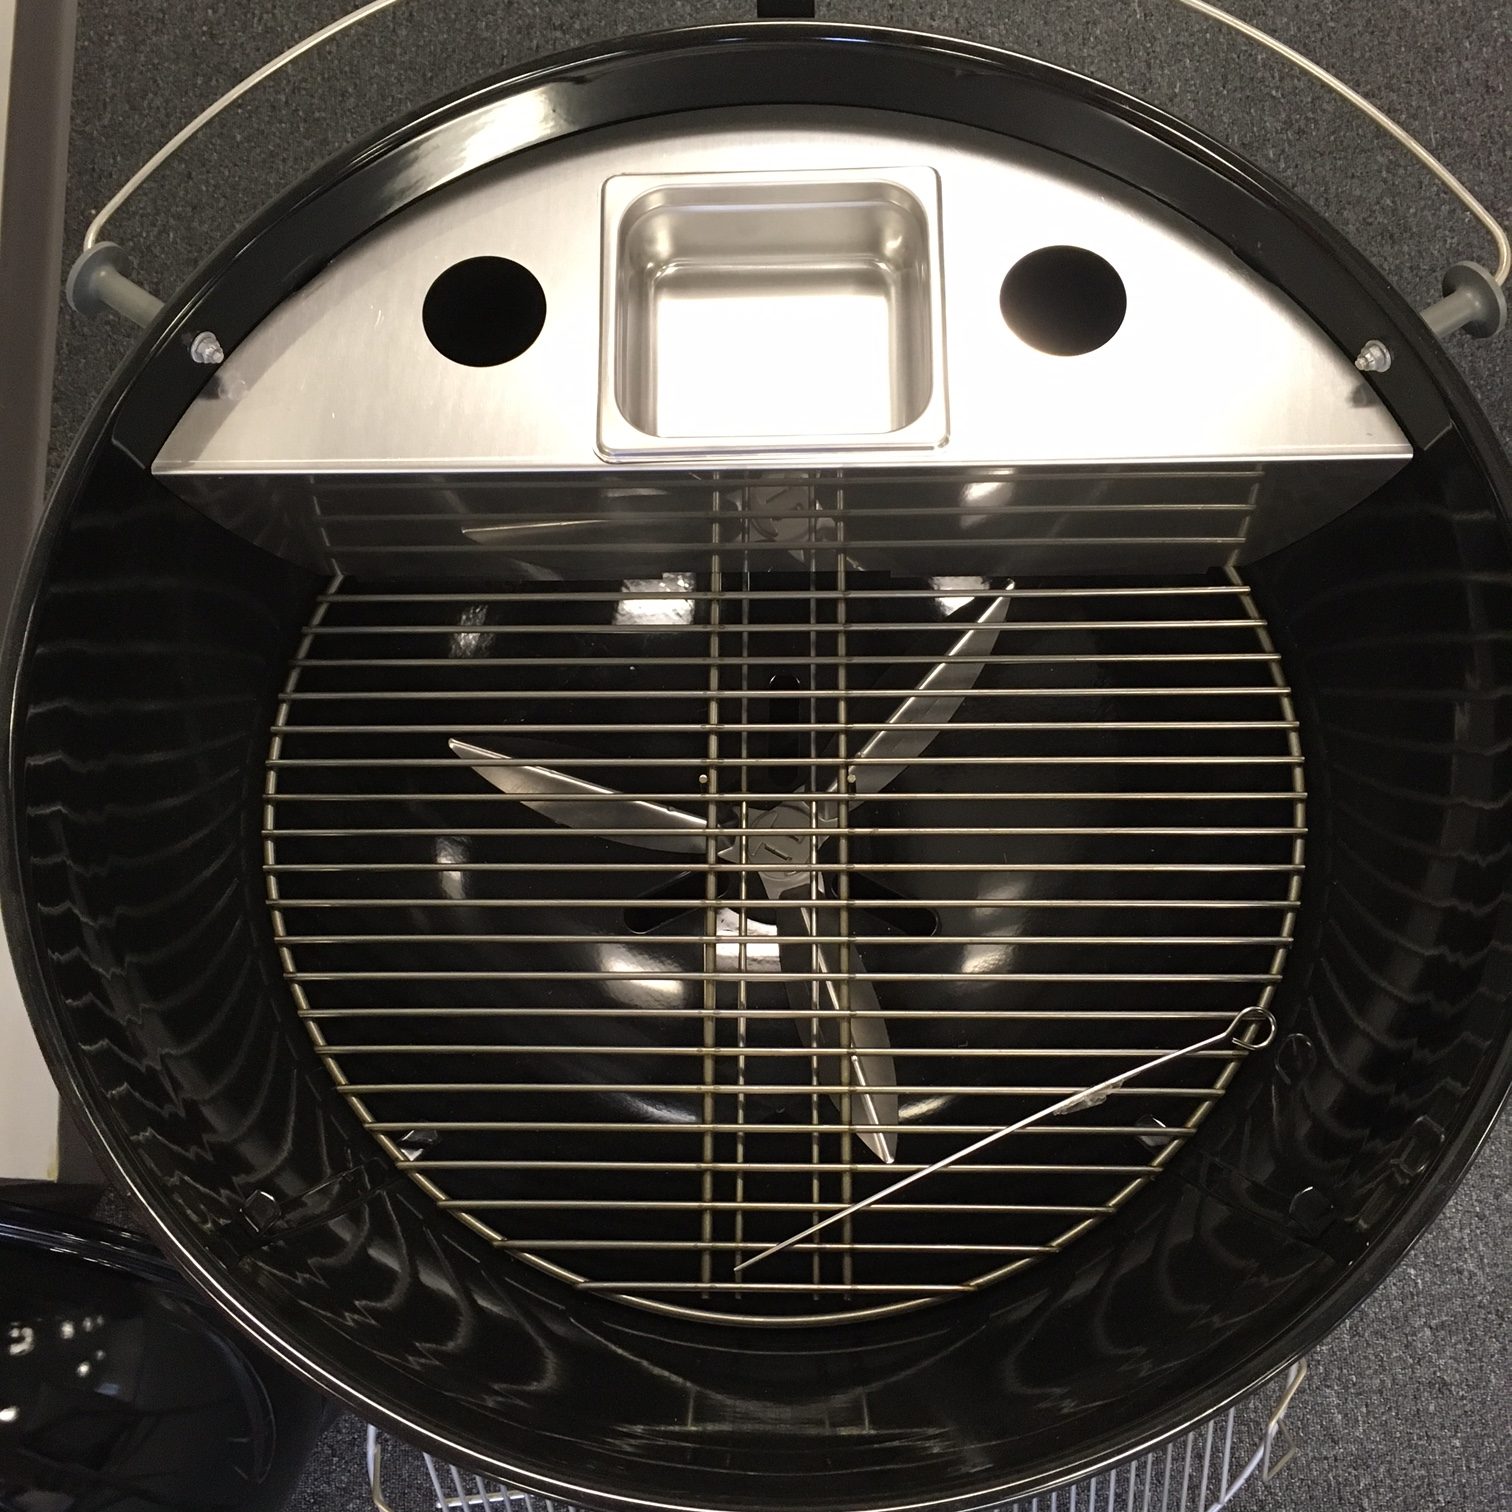 Smokenator 1000, Hovergrill + Thermometer - Smoker Kit for Weber 22 Inch  Charcoal Grills - SMOKENATOR